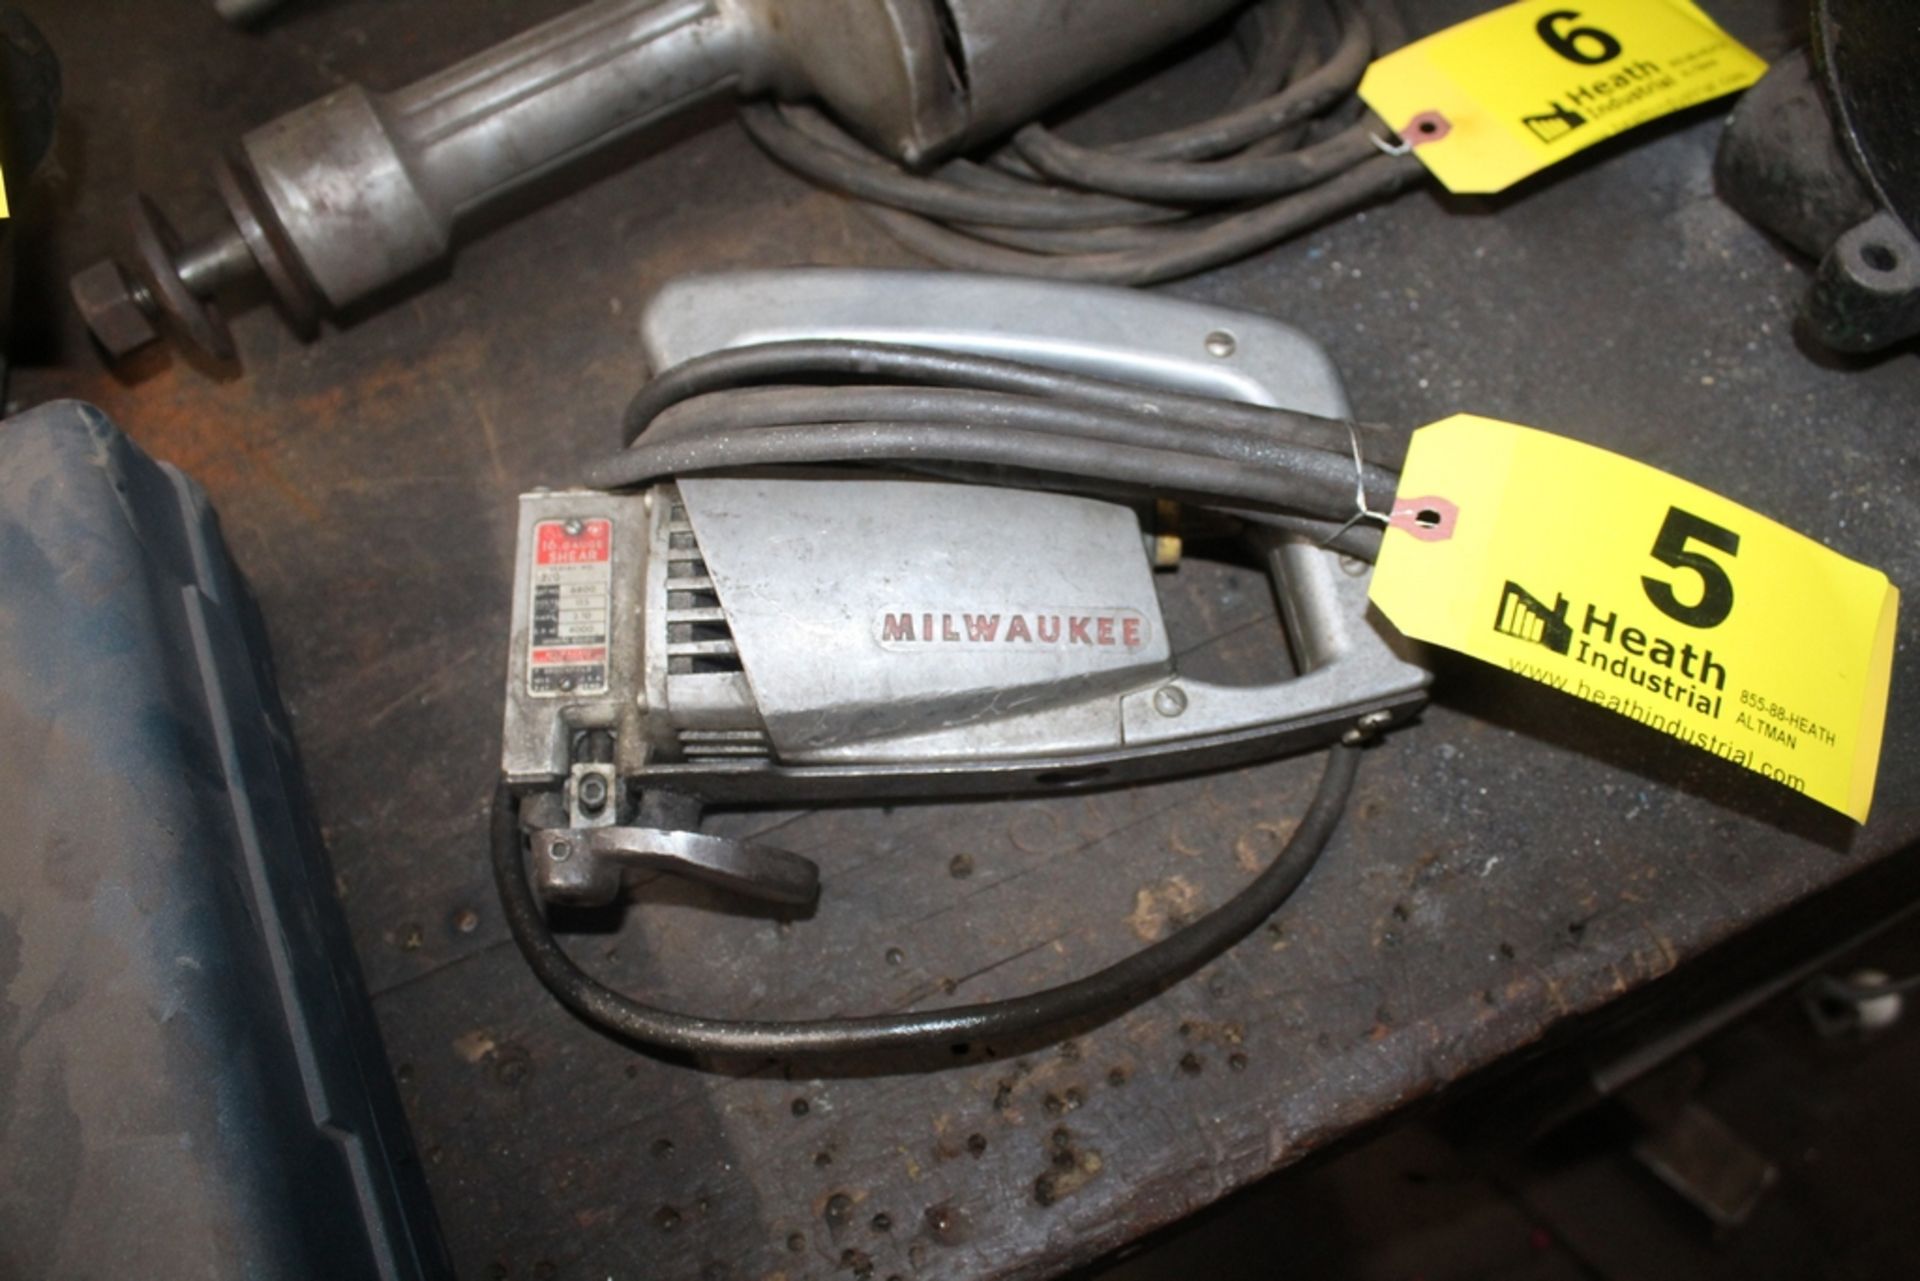 MILWAUKEE NO. 6800 16 GAUGE ELECTRIC SHEAR